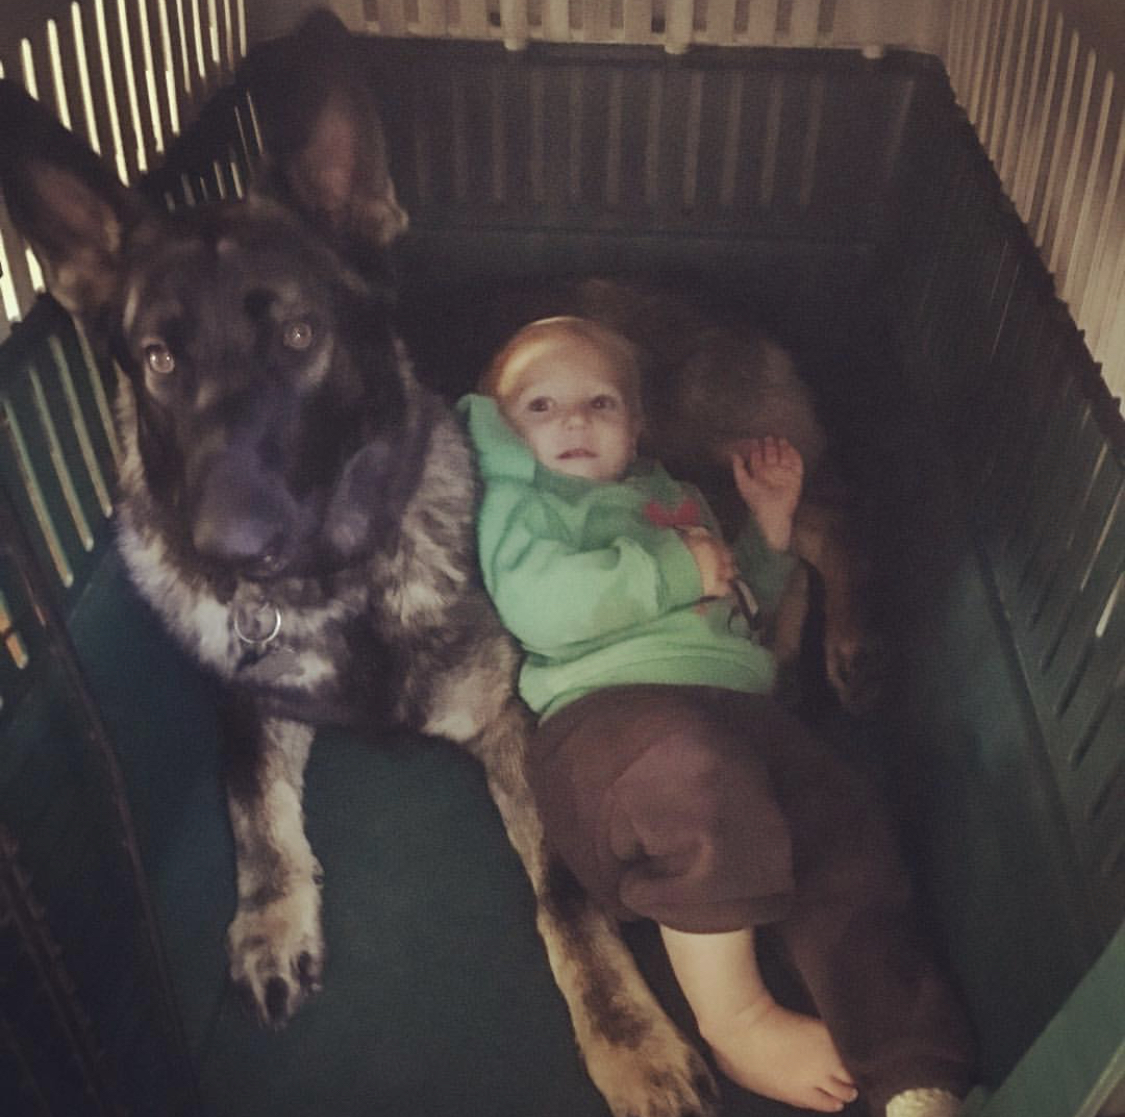 A German Shepherd lying inside the crib with a kid